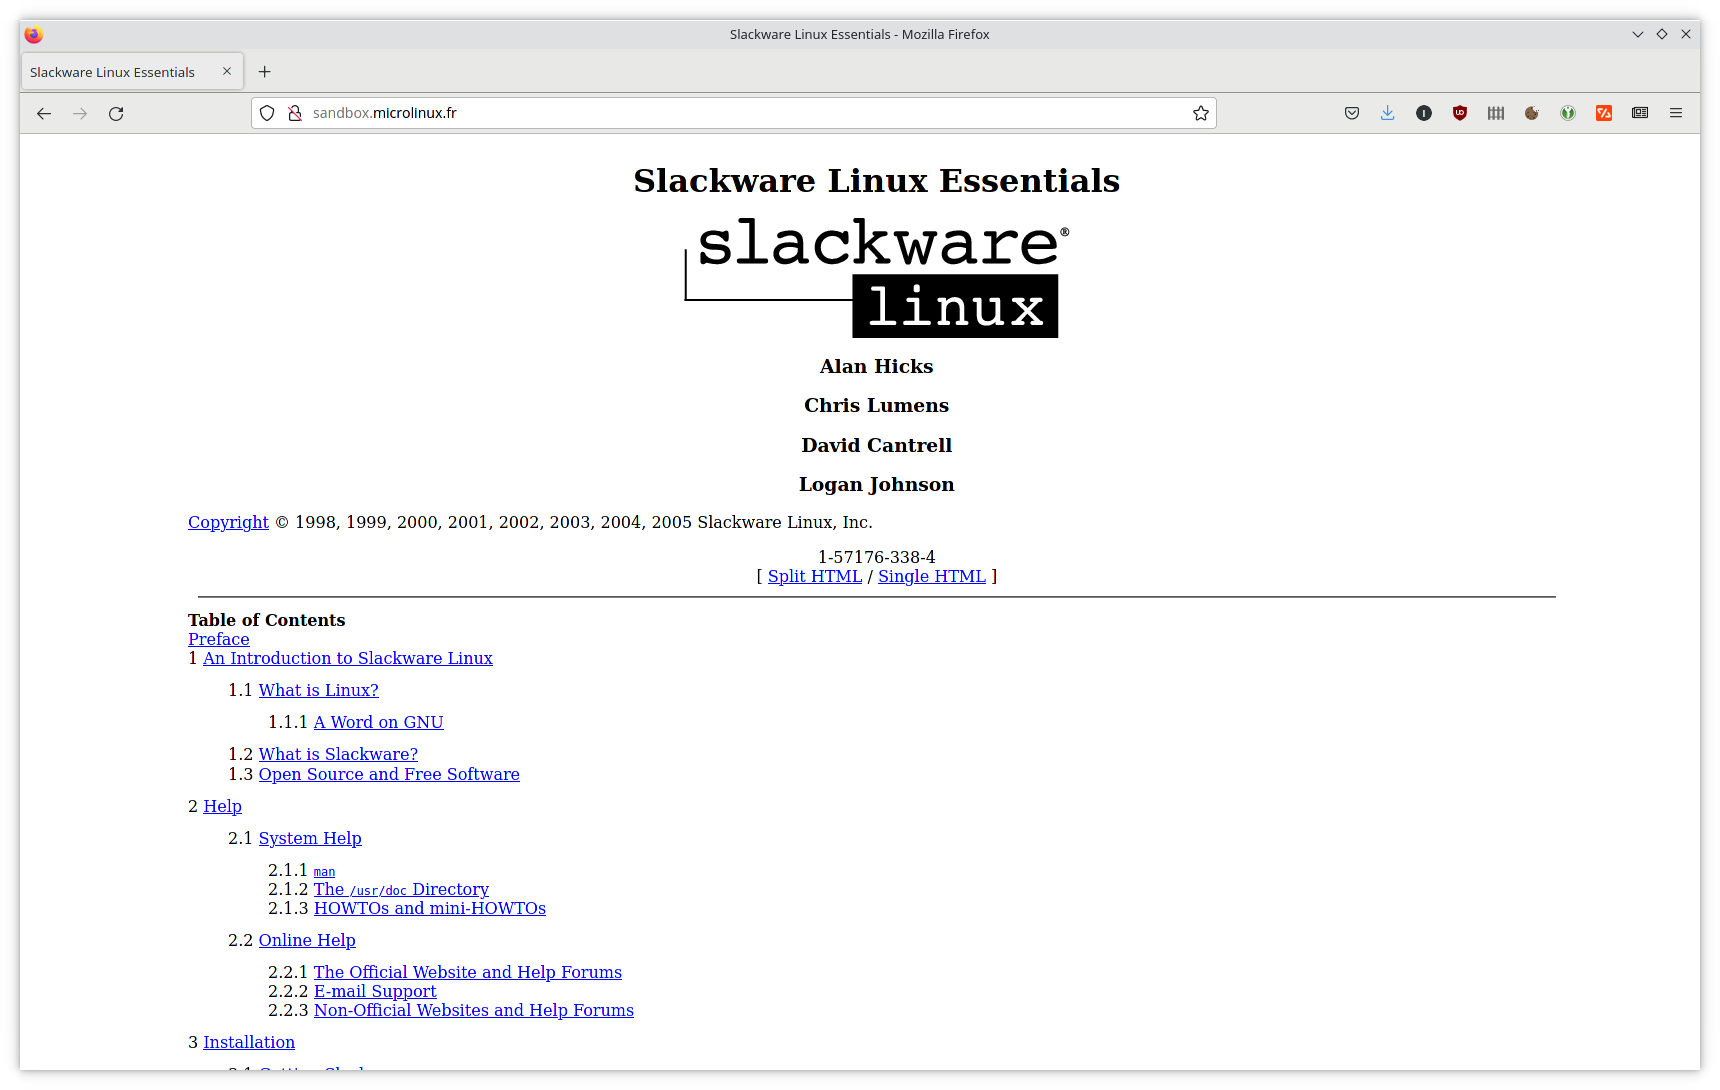 Slackware Linux Documentation